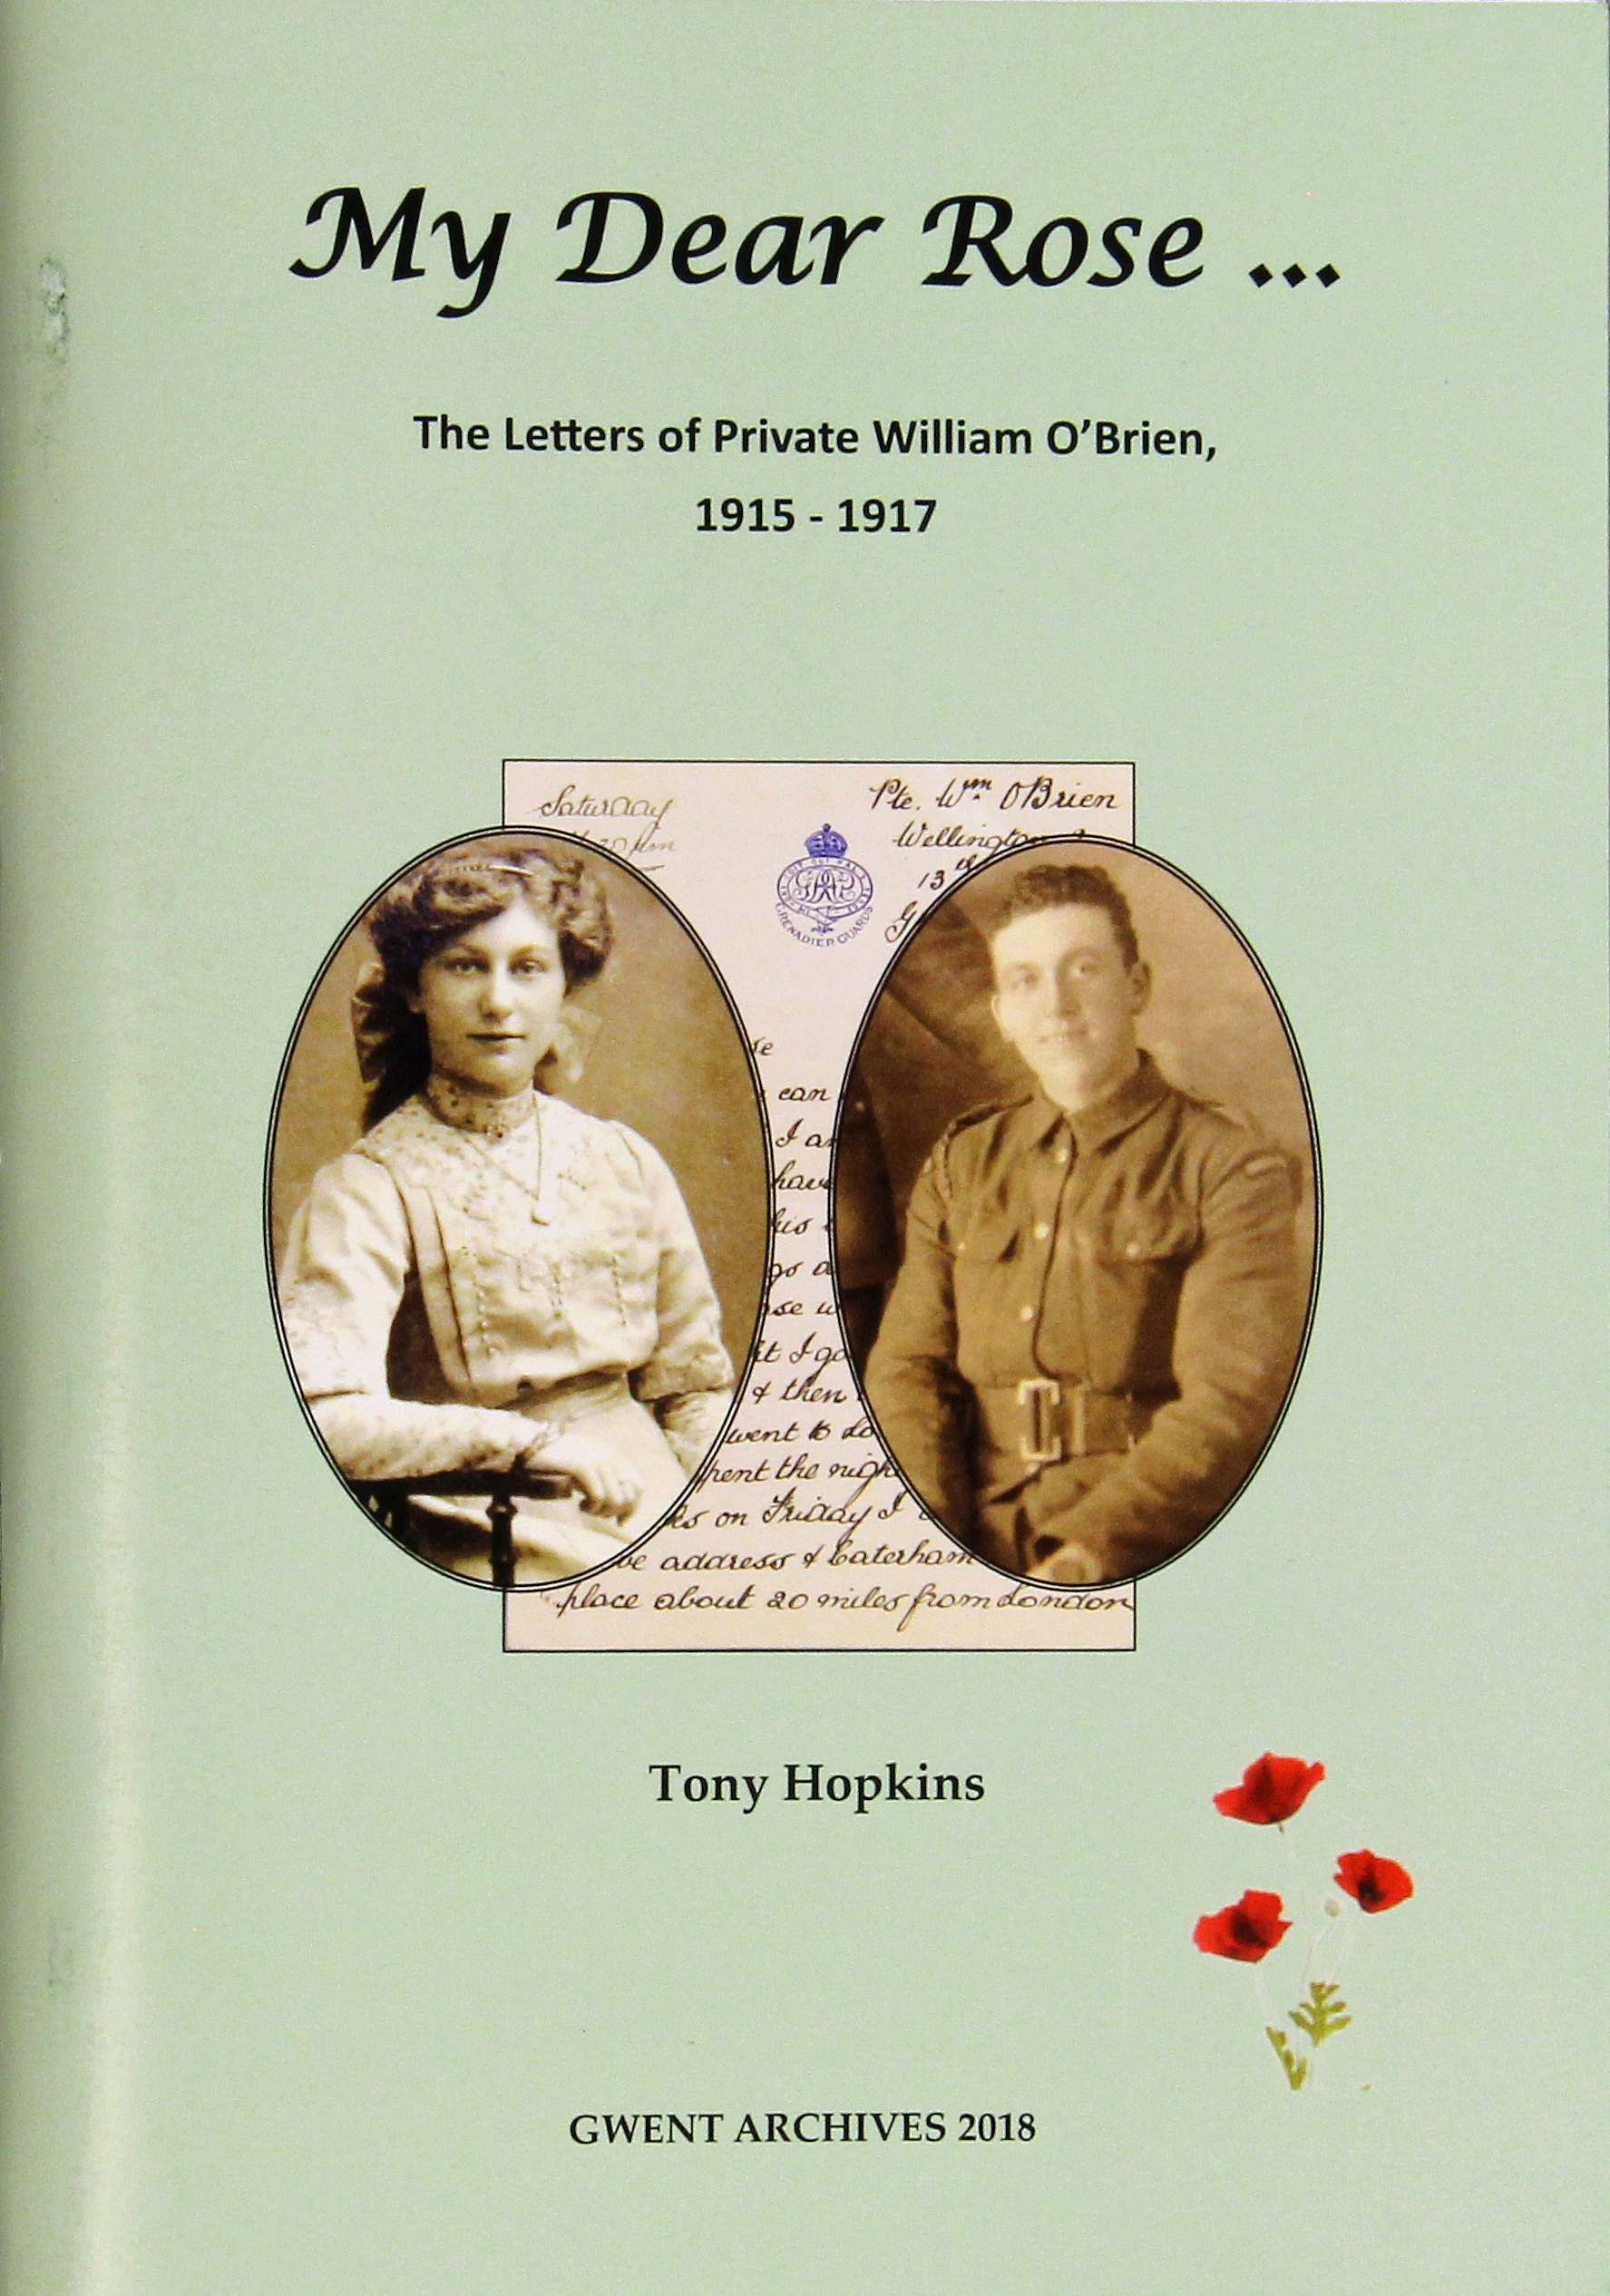 My Dear Rose: Letters of Private William O'Brien 1915-1917, Tony Hopkins, 2018, £2.00